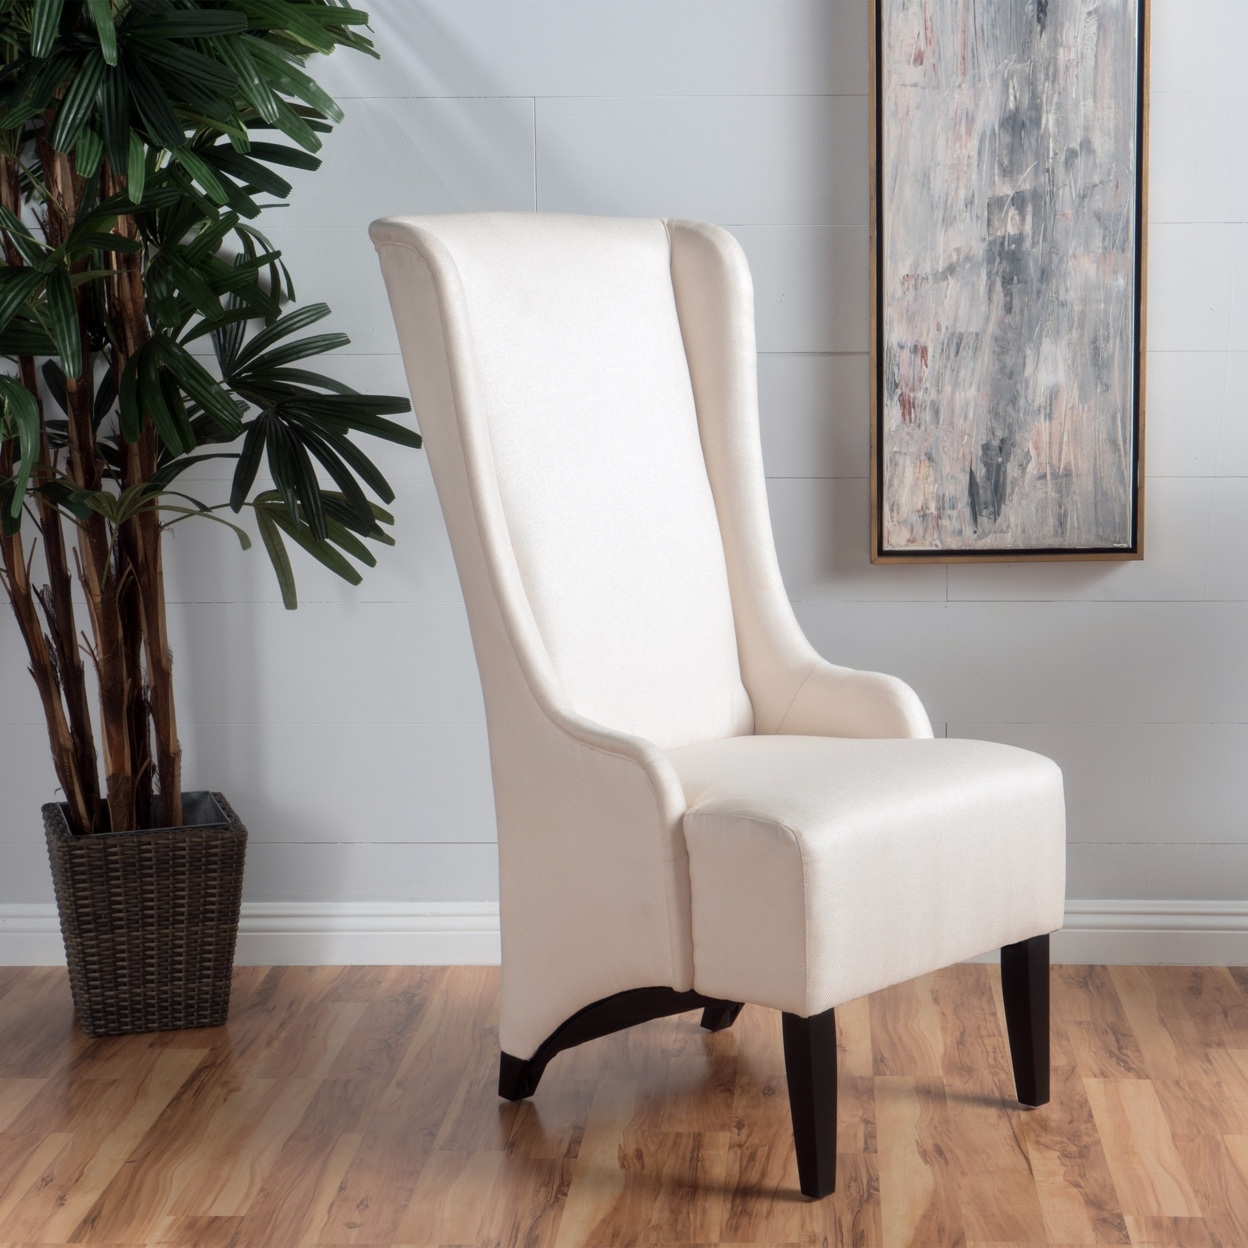 Sheldon Traditional Design High Back Fabric Dining Chair - Light Gray